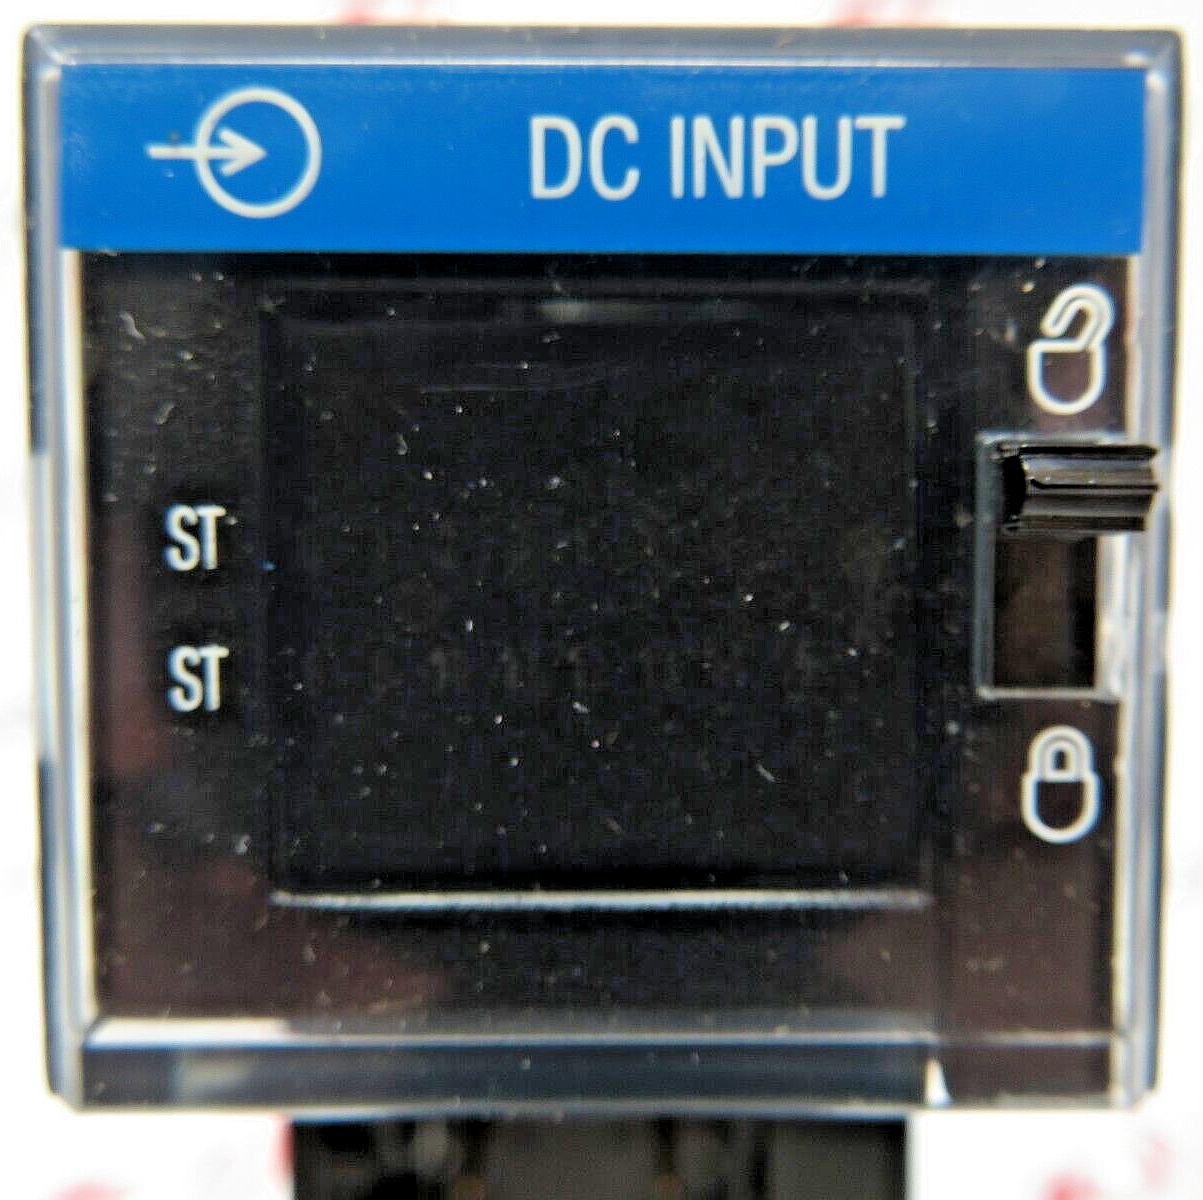 Allen-Bradley 1756-IB16/A ControlLogix DC Discrete Input Module 16-PT 24VDC